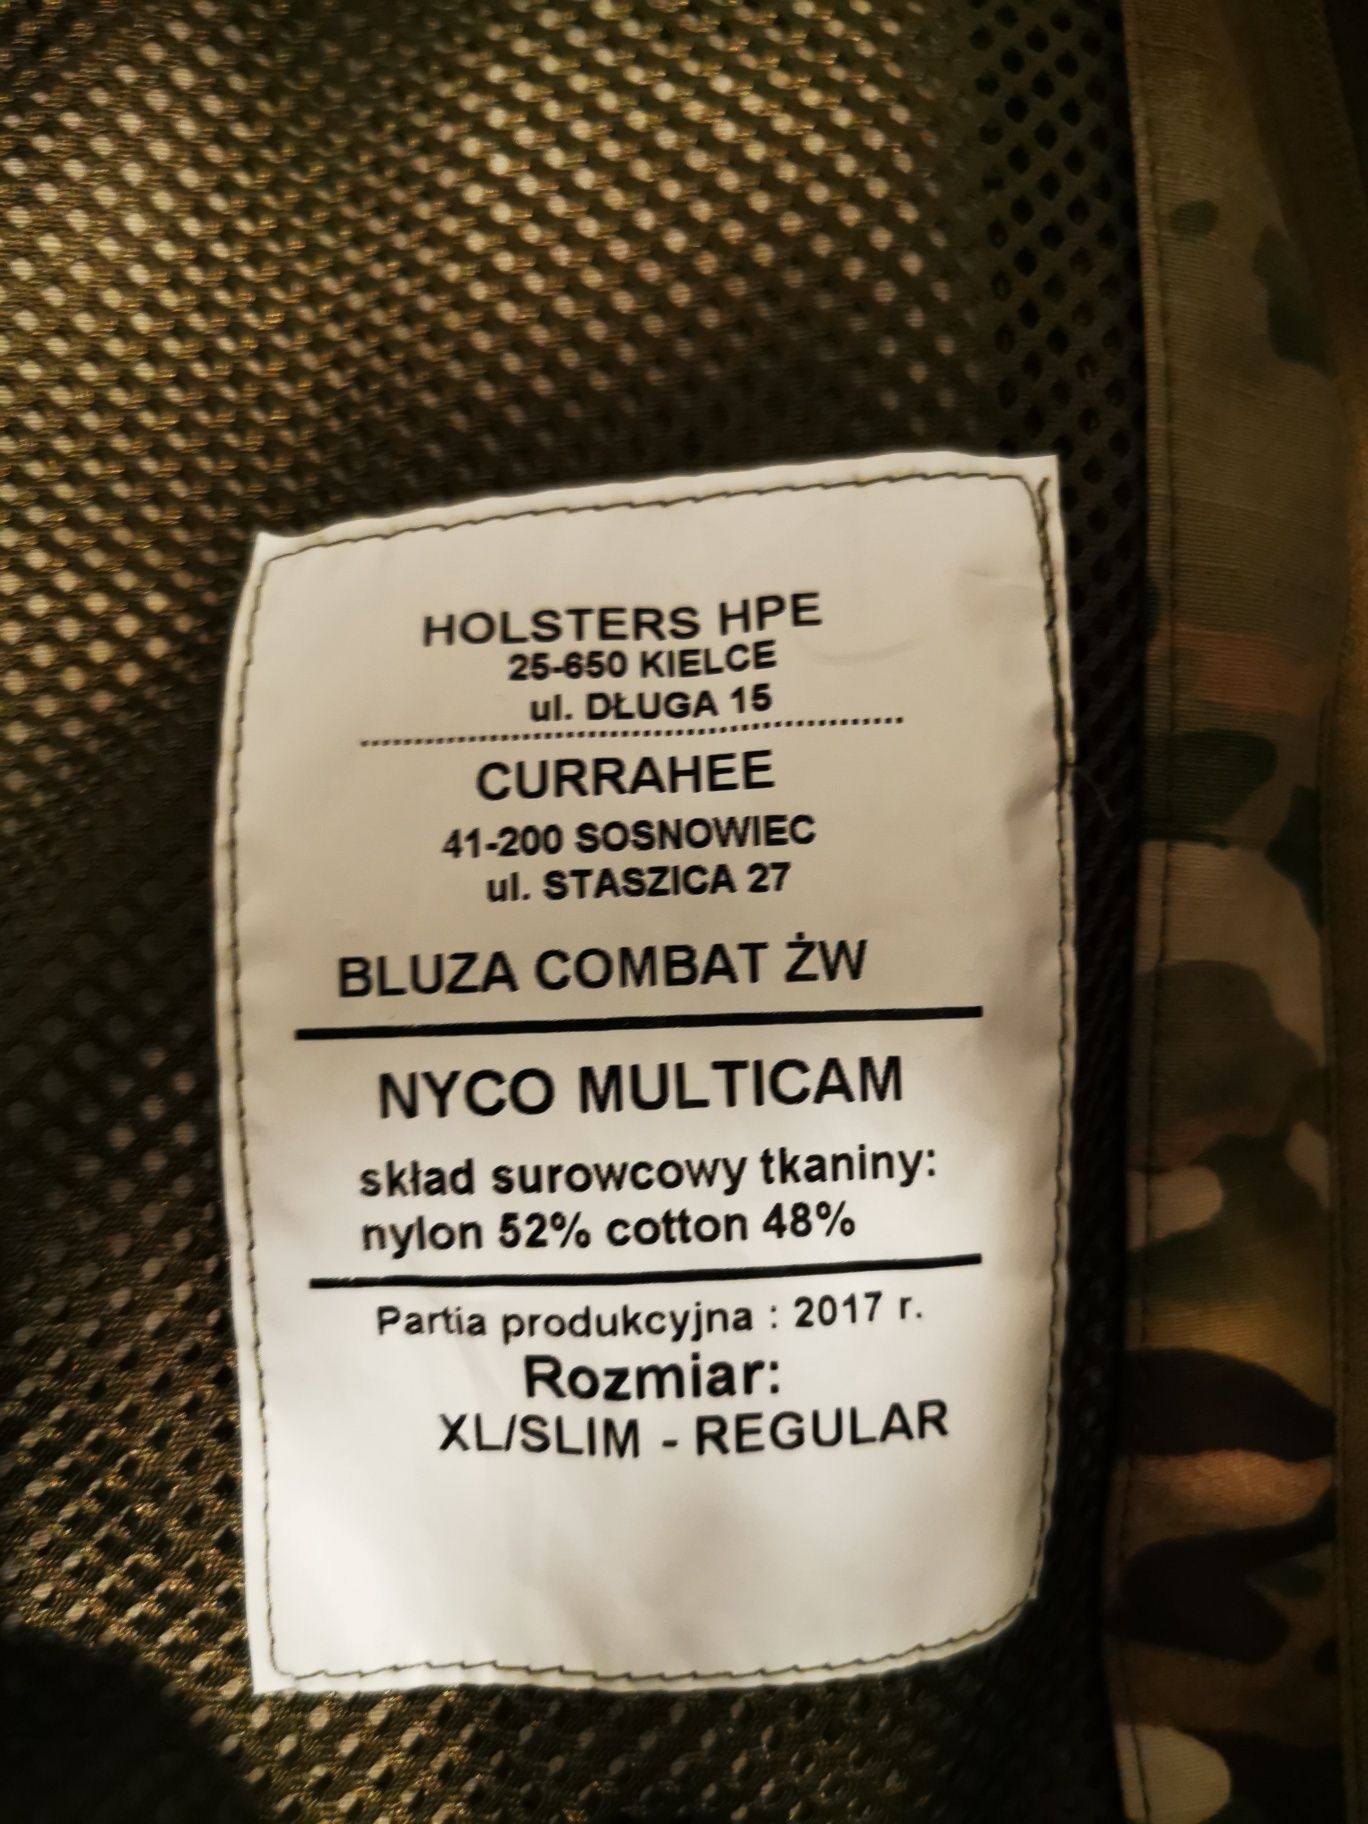 Komplet multicam spodnie bluza combat Currahee crye precision xl M reg